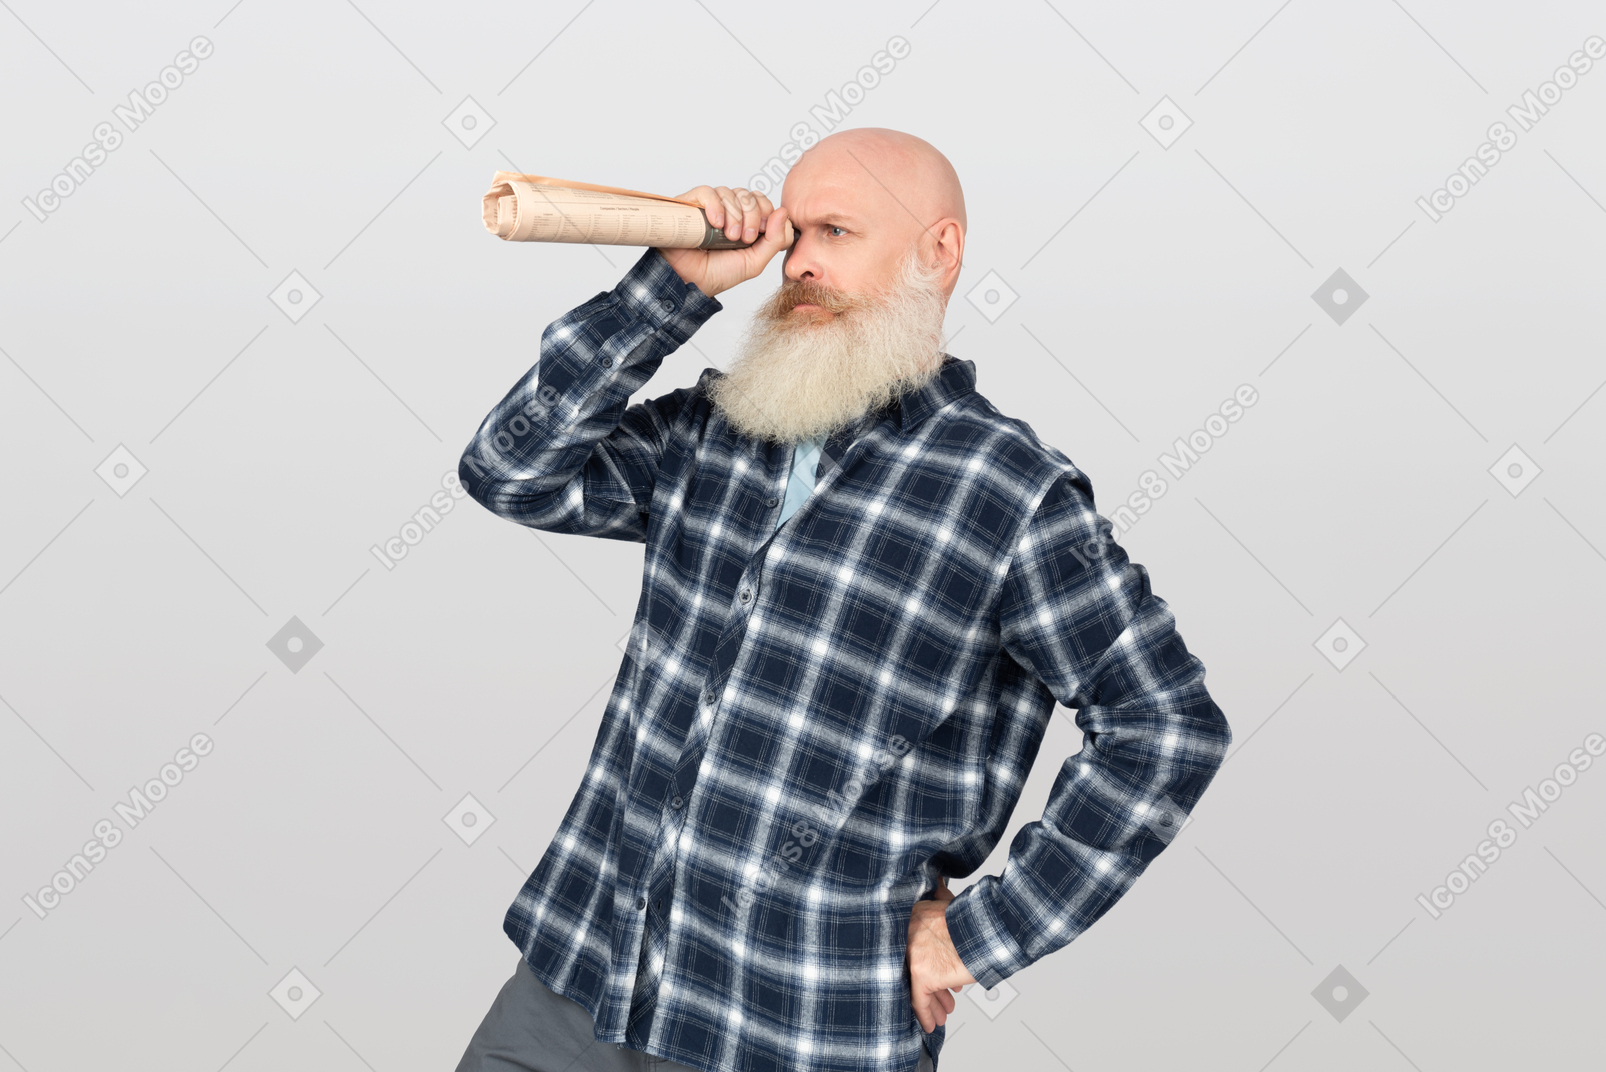 Hombre barbudo mirando a través de un tubo de papel